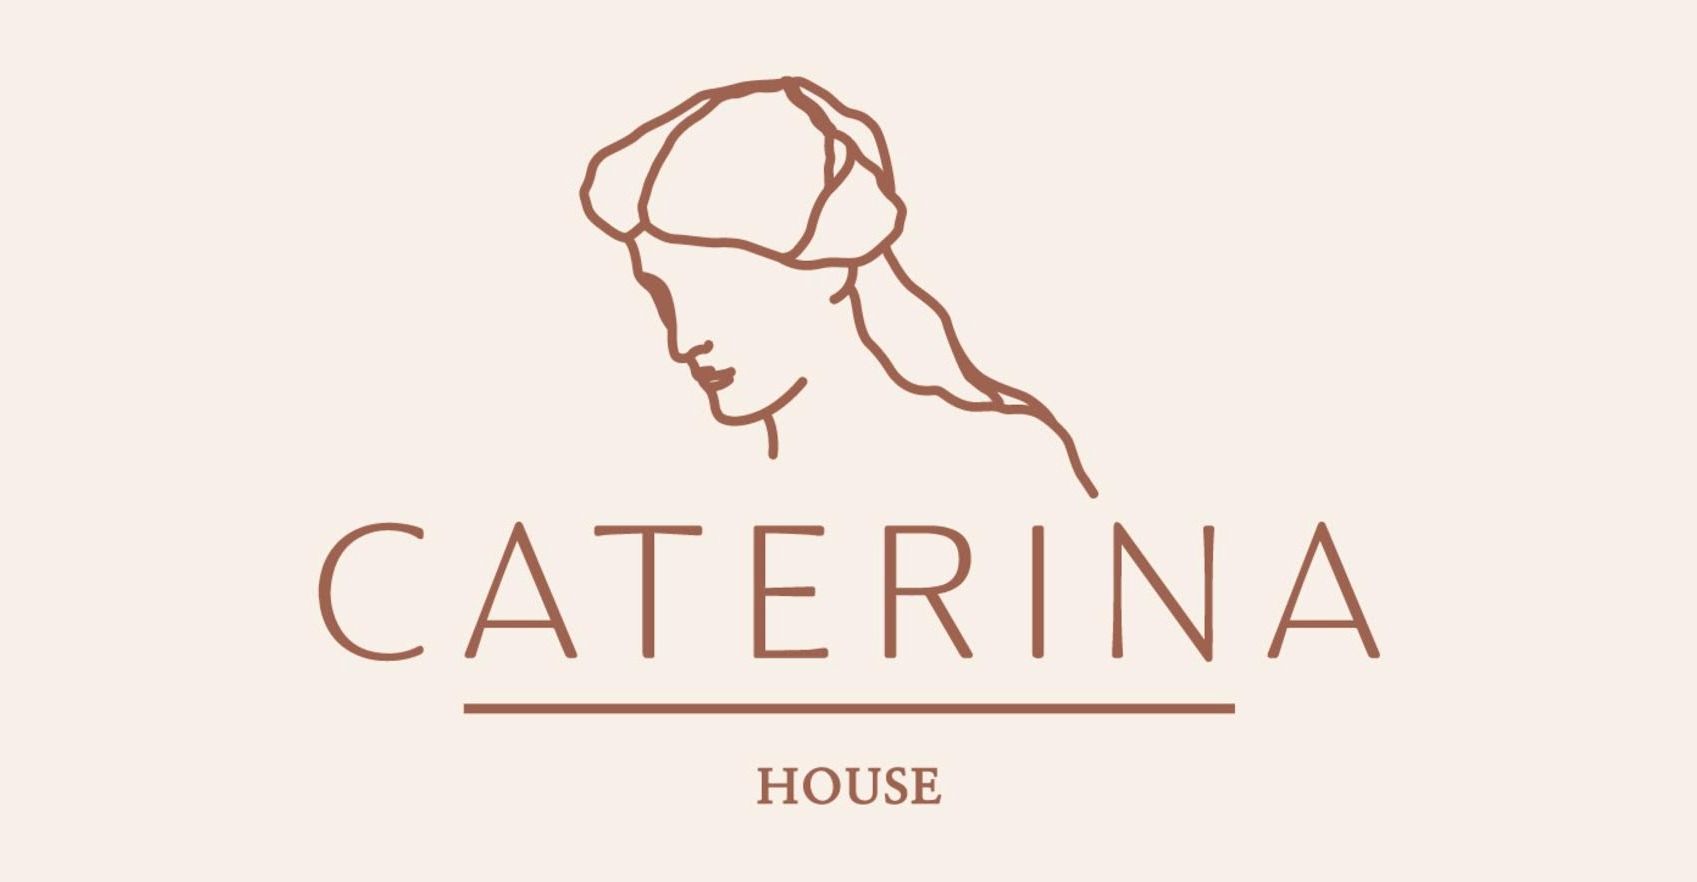 Caterina House